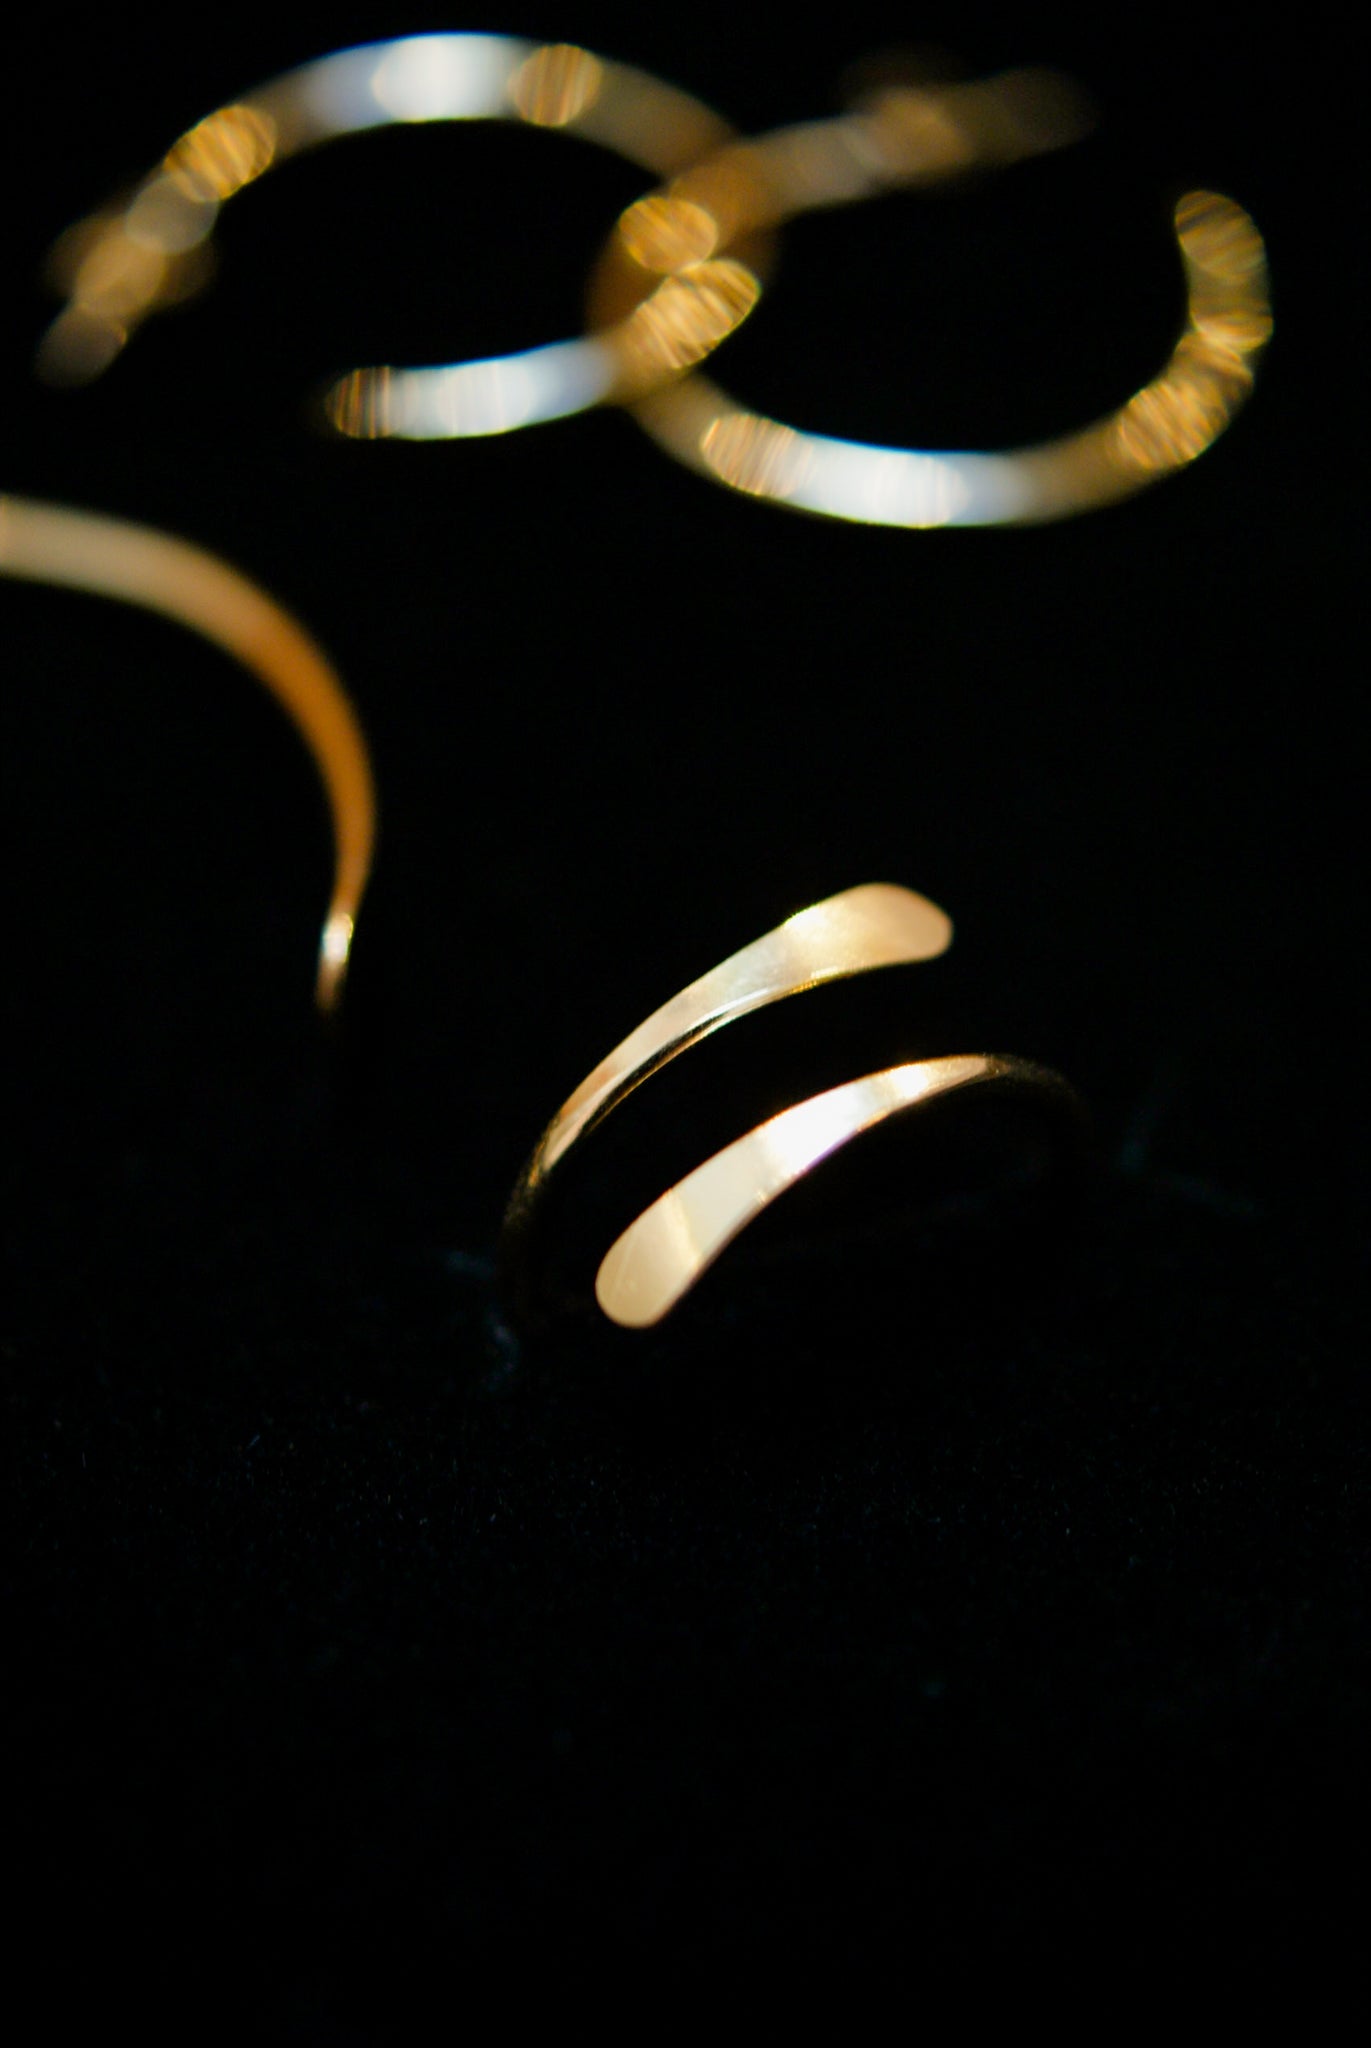 Sunburst Ring, Solid 14K Gold